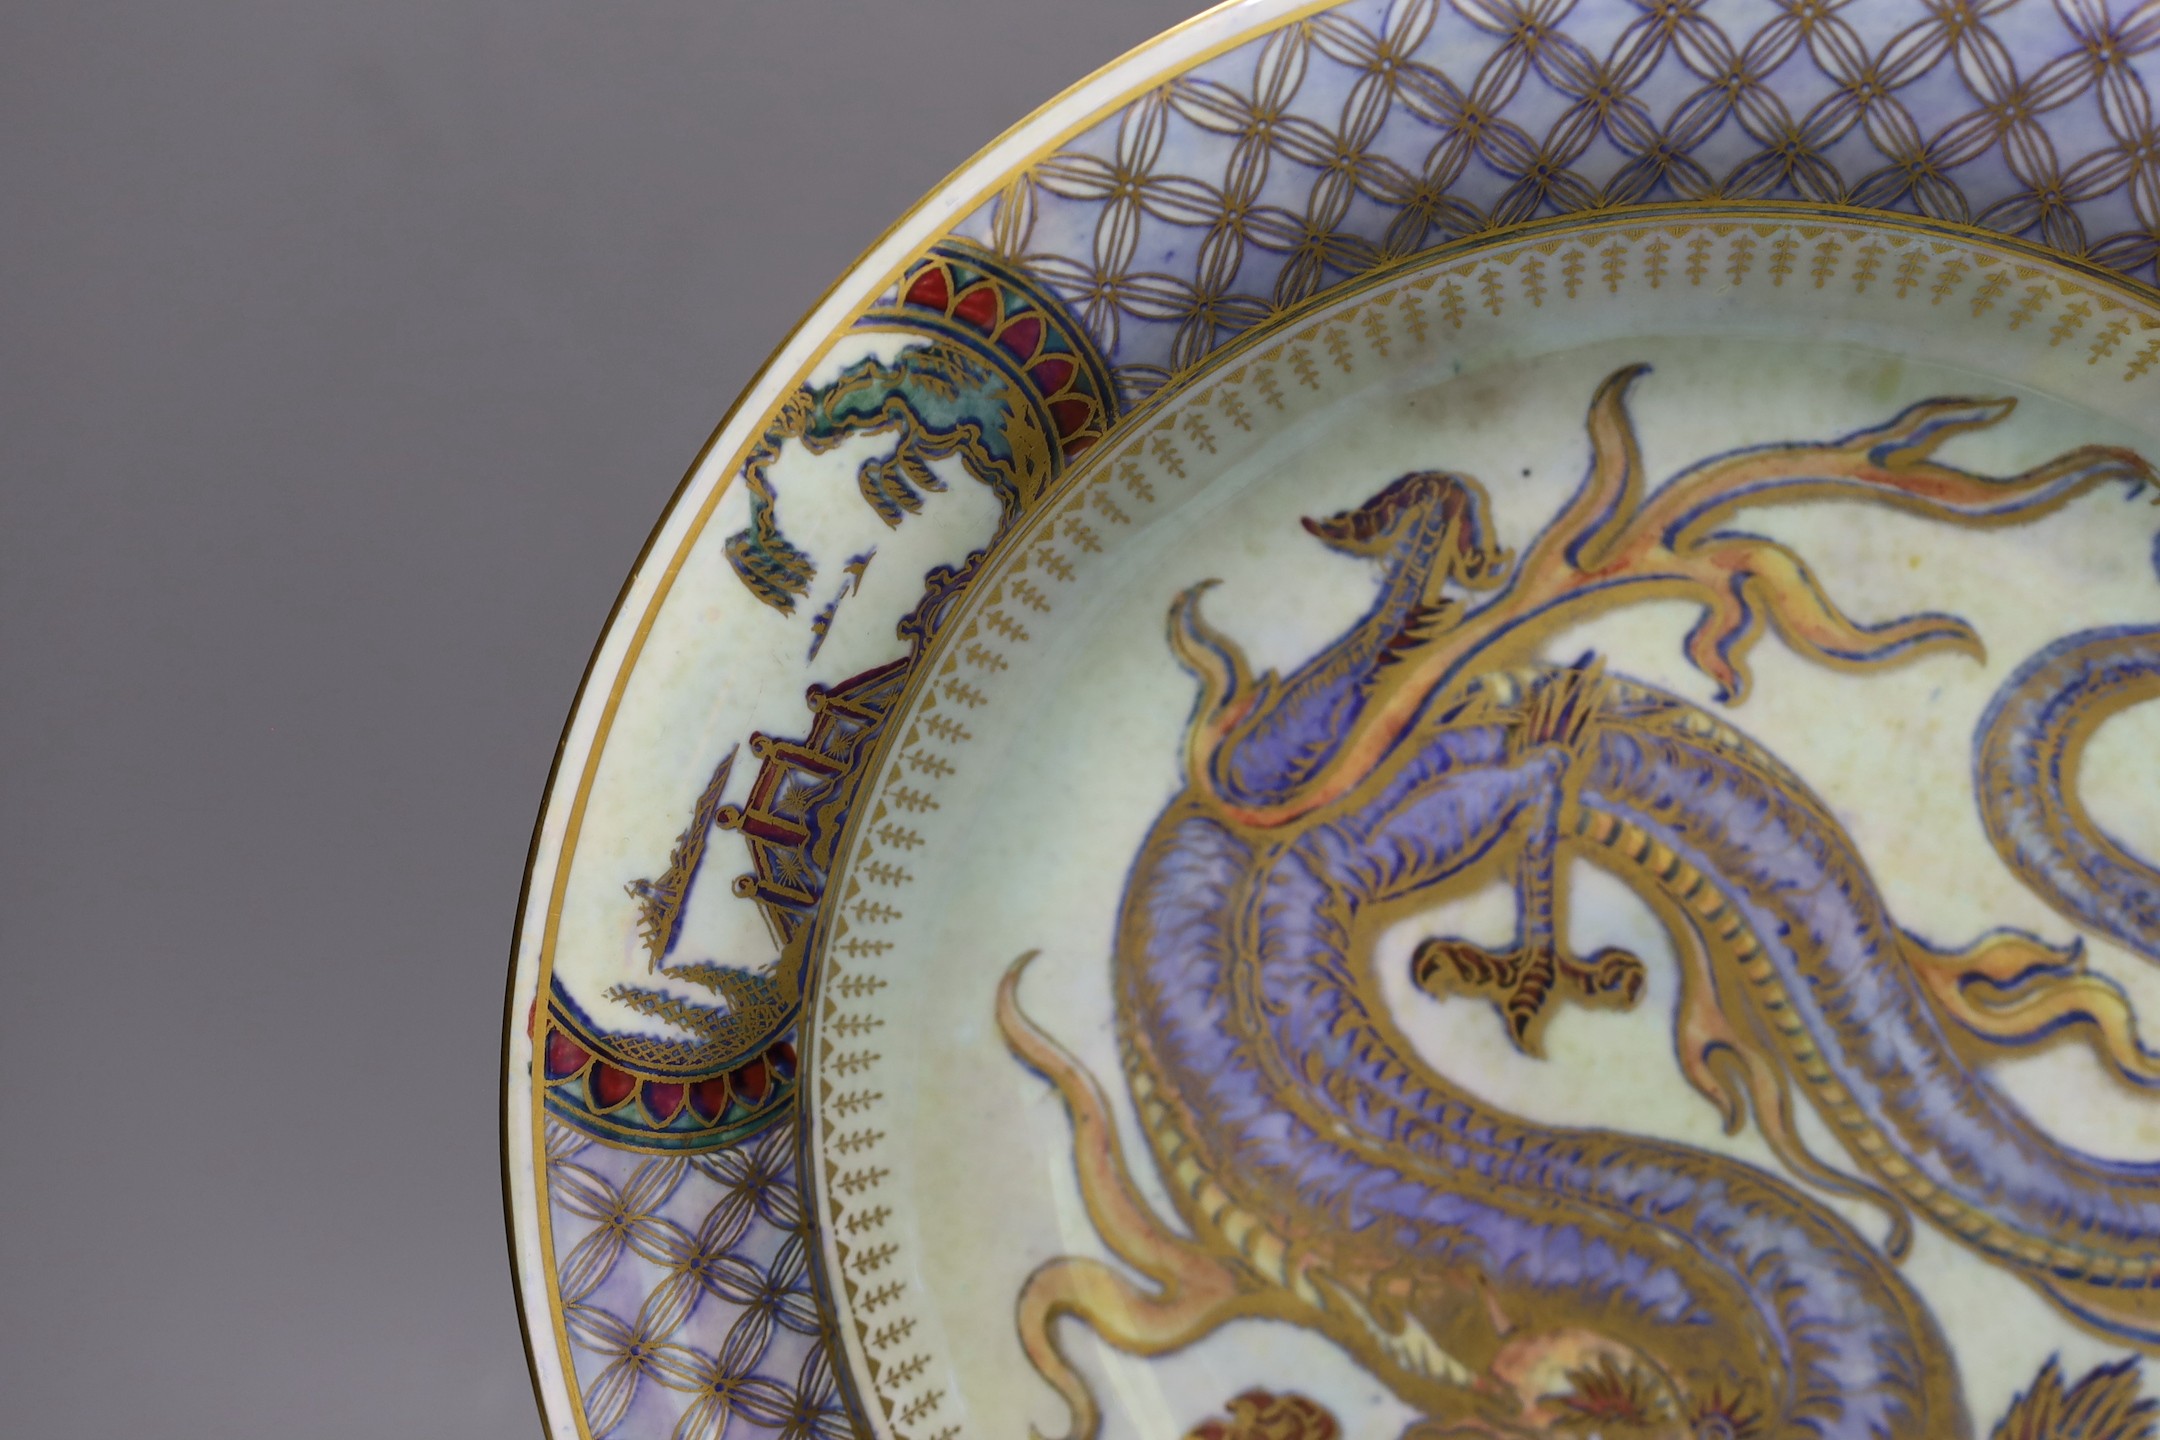 A large Wedgwood lustre dragon shallow bowl, designed by Daisy Makeig-Jones, pattern no. Z4829, 28cms diameter